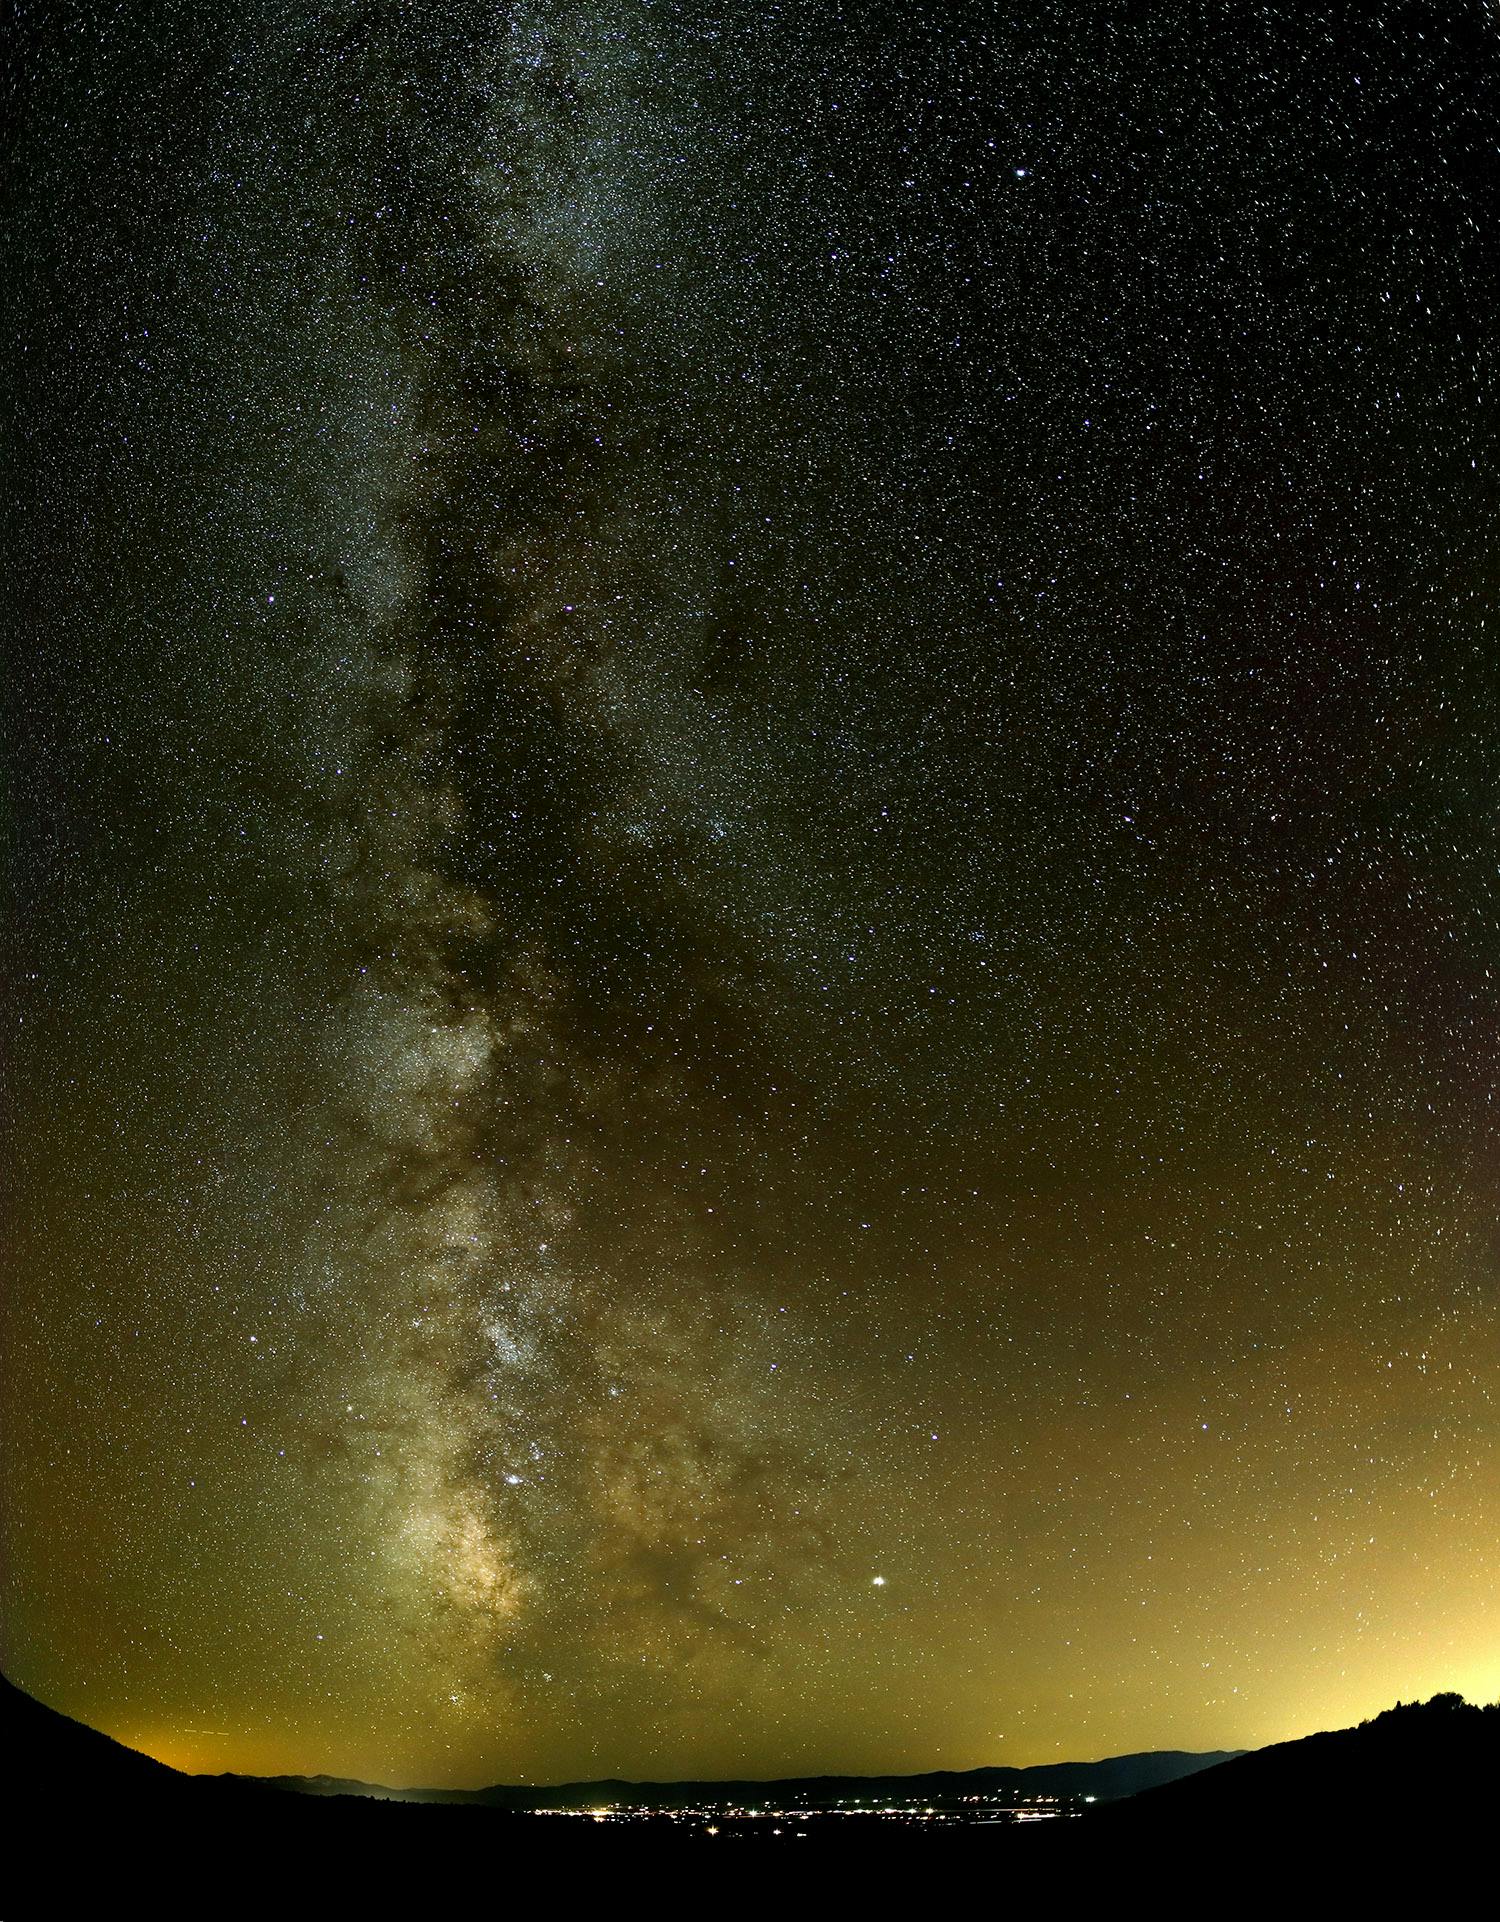 The Milky Way in the night sky of Driggs Idaho.  